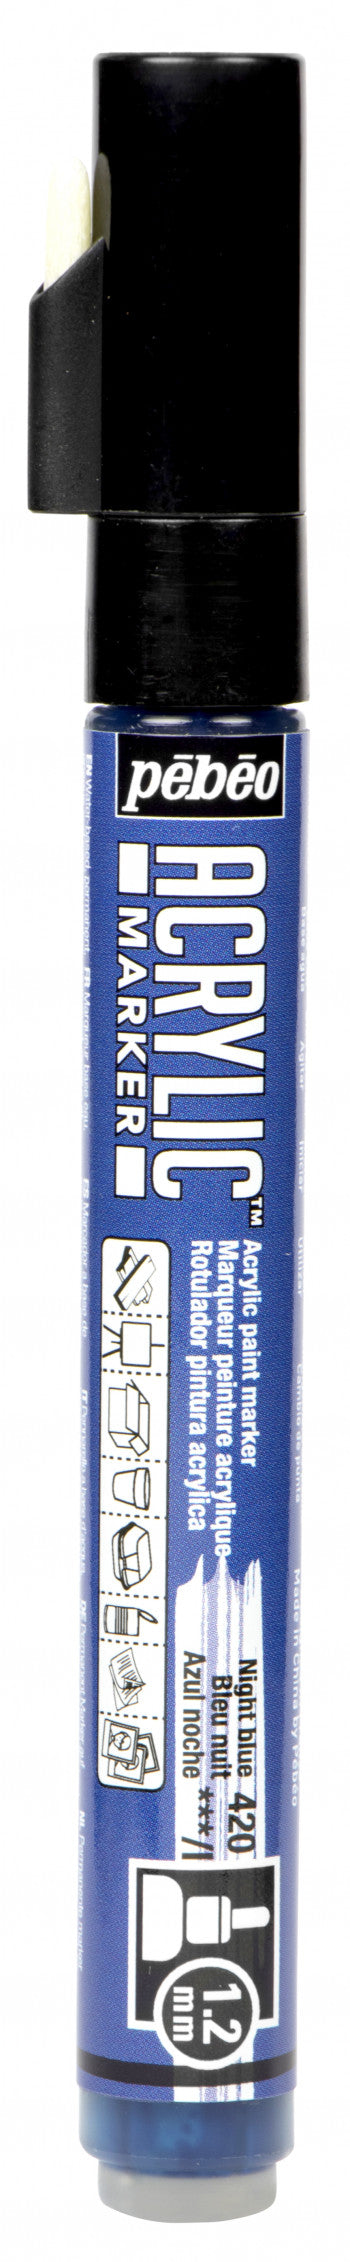 Acrylic Marker 1.2mm Pebeo Midnight blue - 420